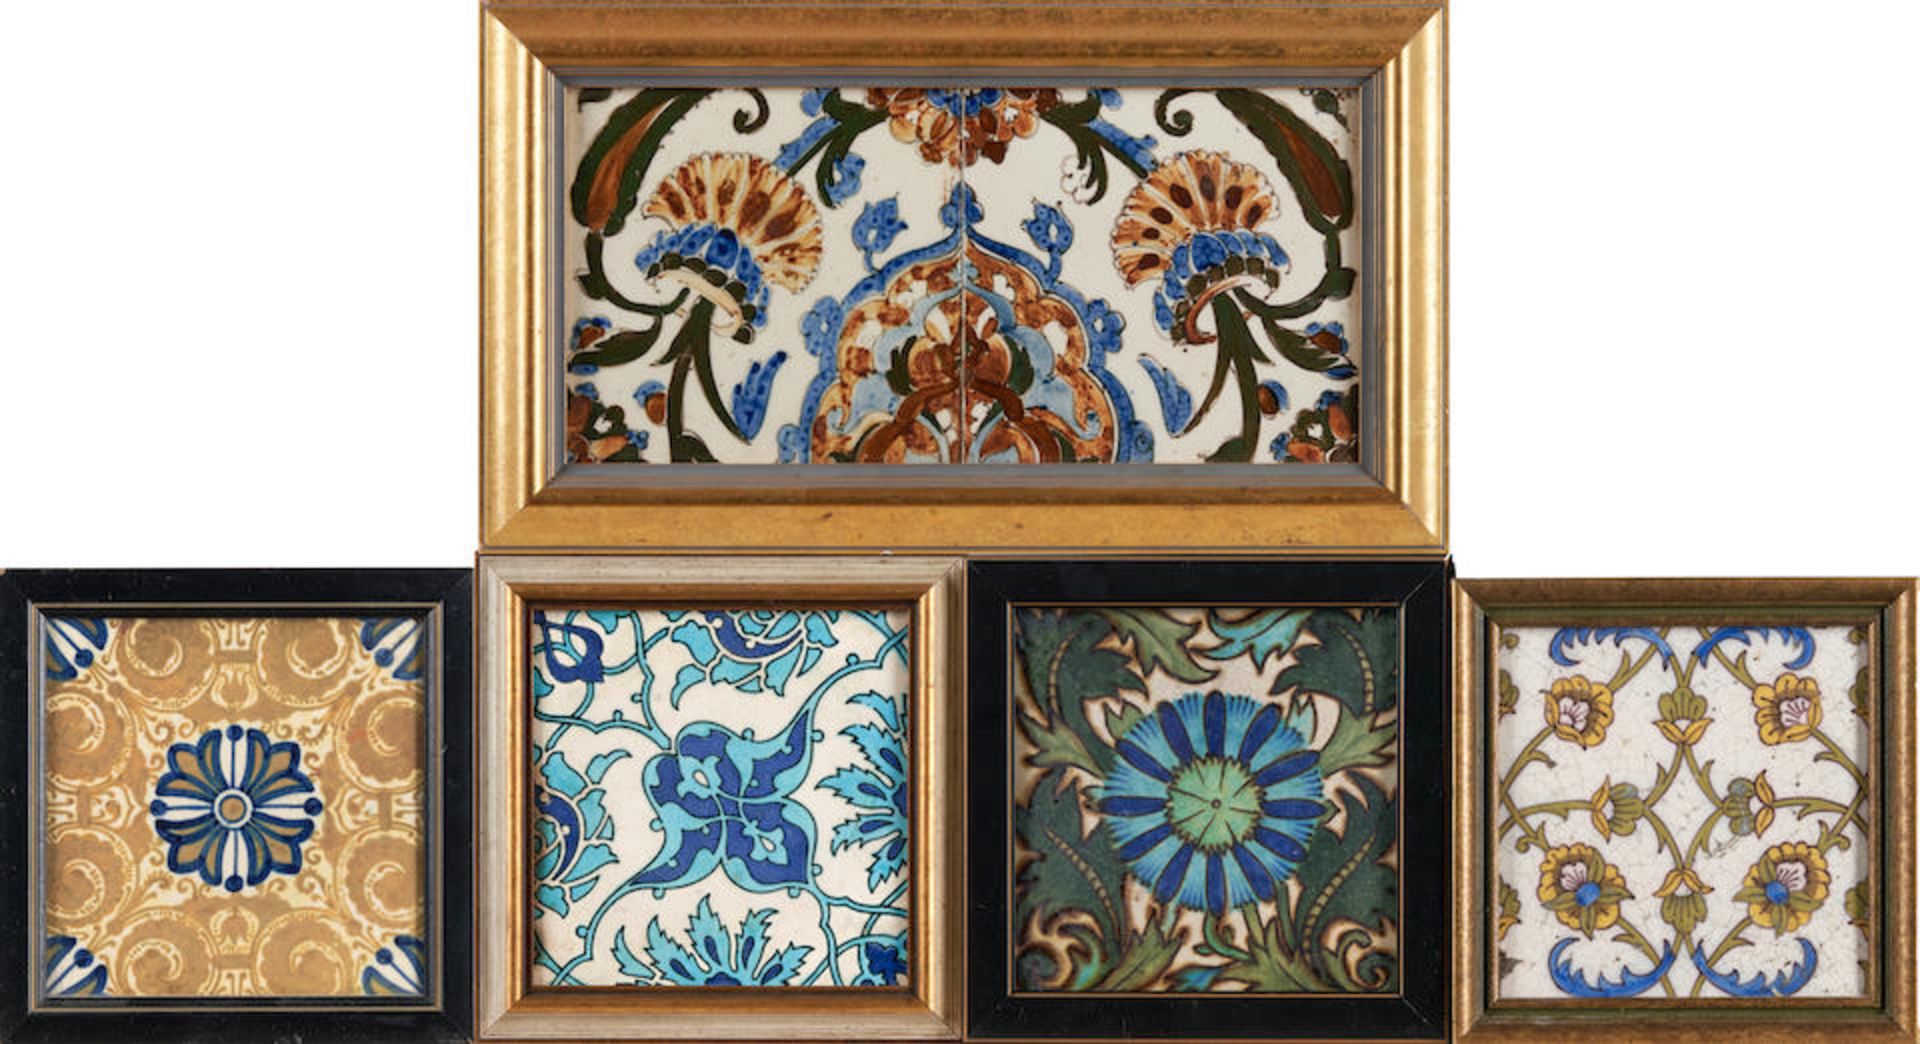 SIX FLORAL TILES, England and Europe, c. 1900, two-tile panel, Hague, Rozenburg, maker's mark, t...